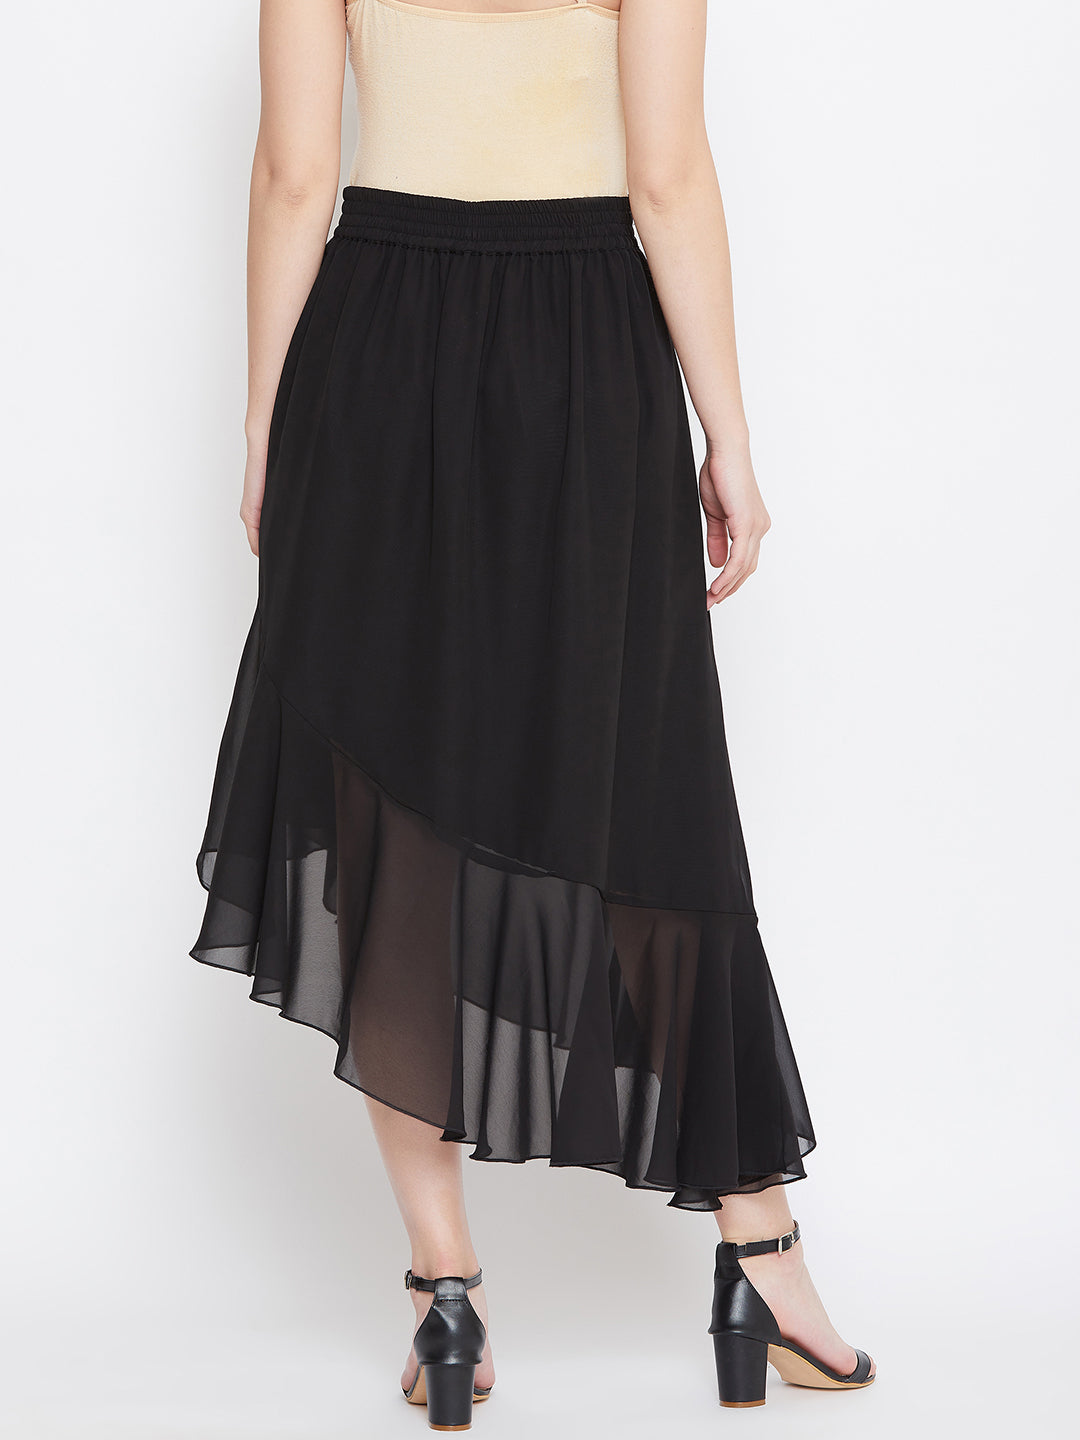 Black Asymmetrical Ruffled Skirt (Sku- BLMG20219).